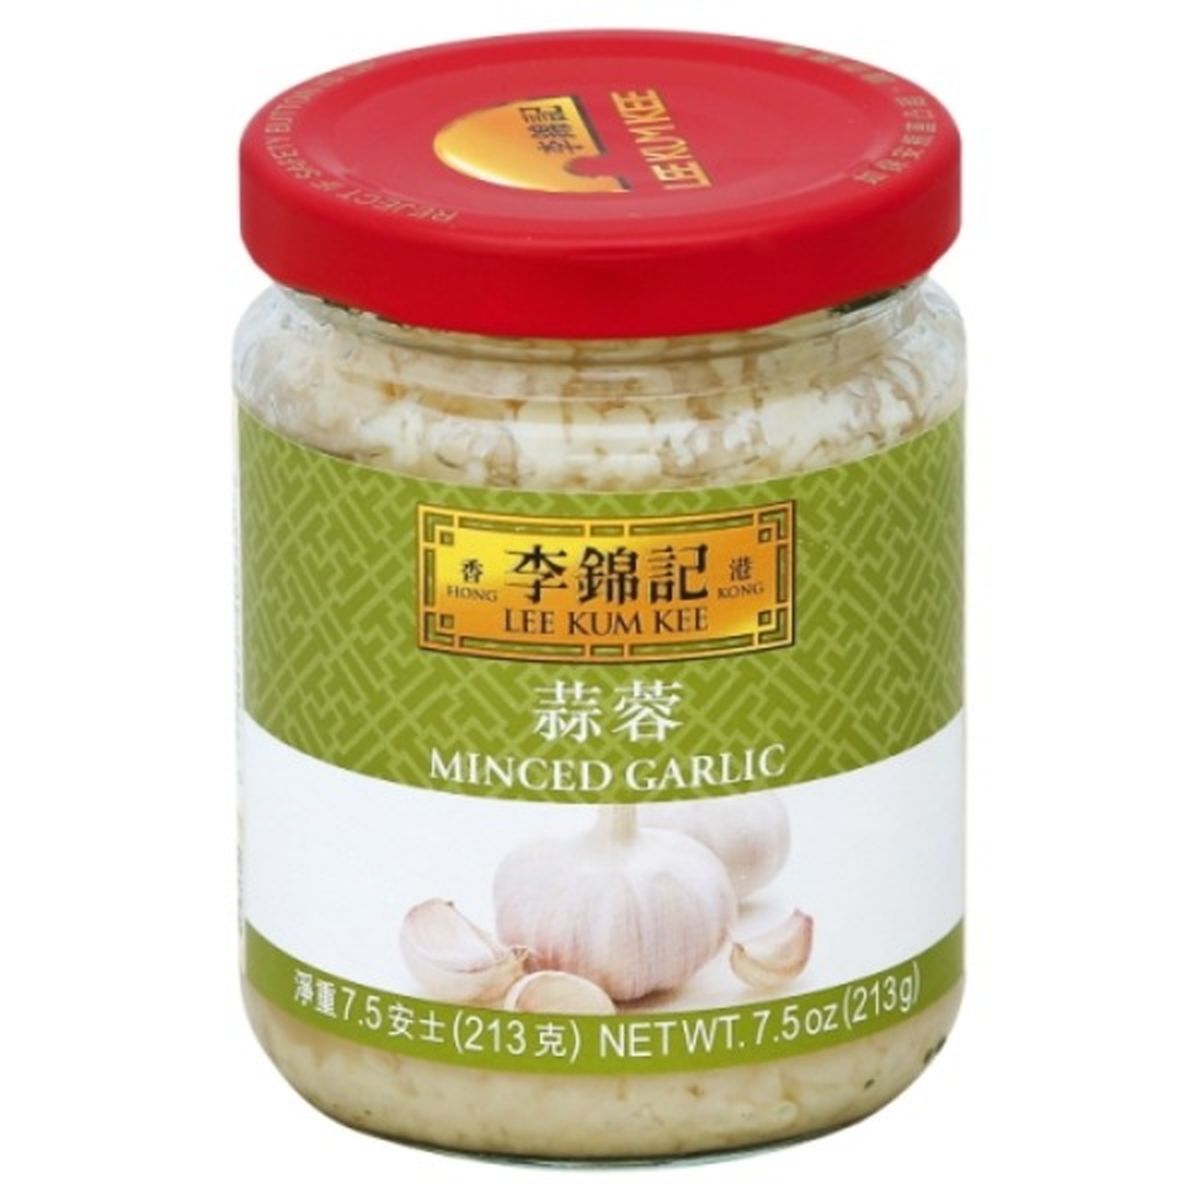 Calories in Lee Kum Kee Garlic, Minced